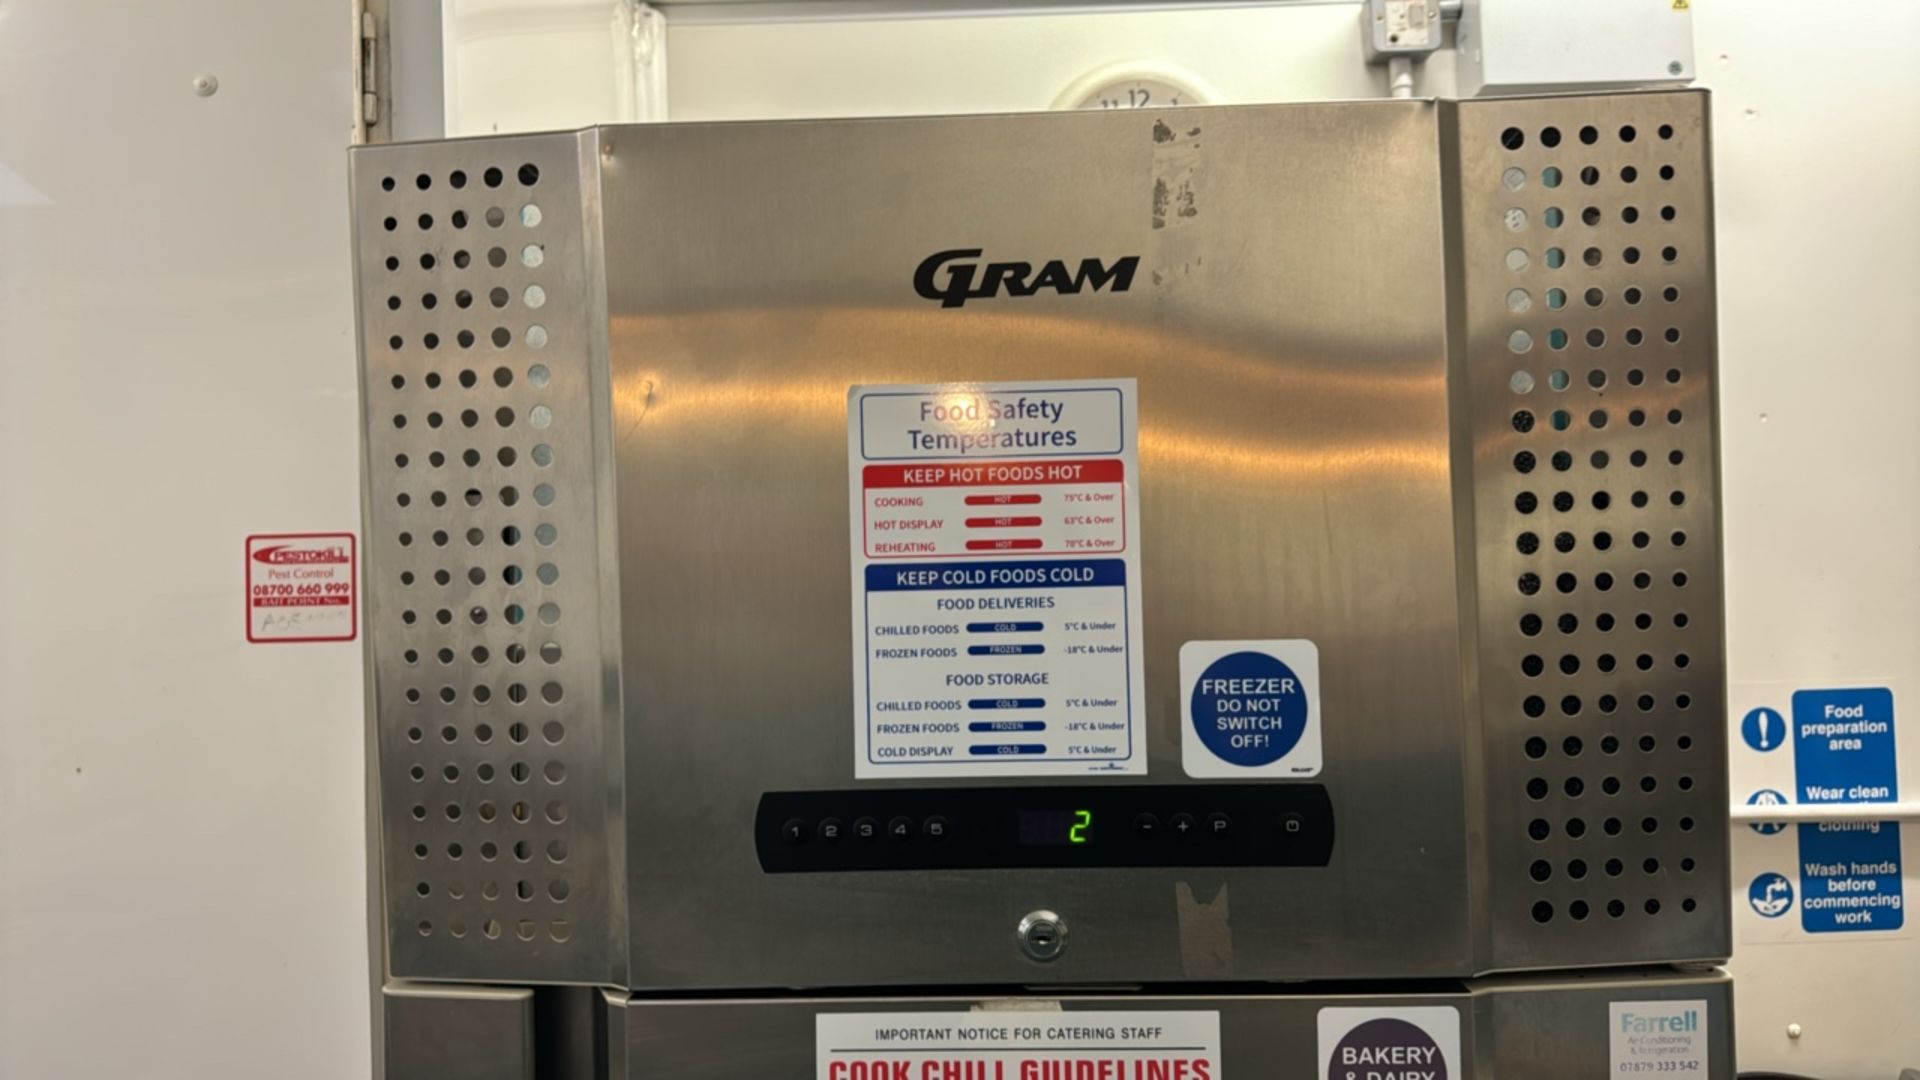 Gram Refrigerator - Image 3 of 6